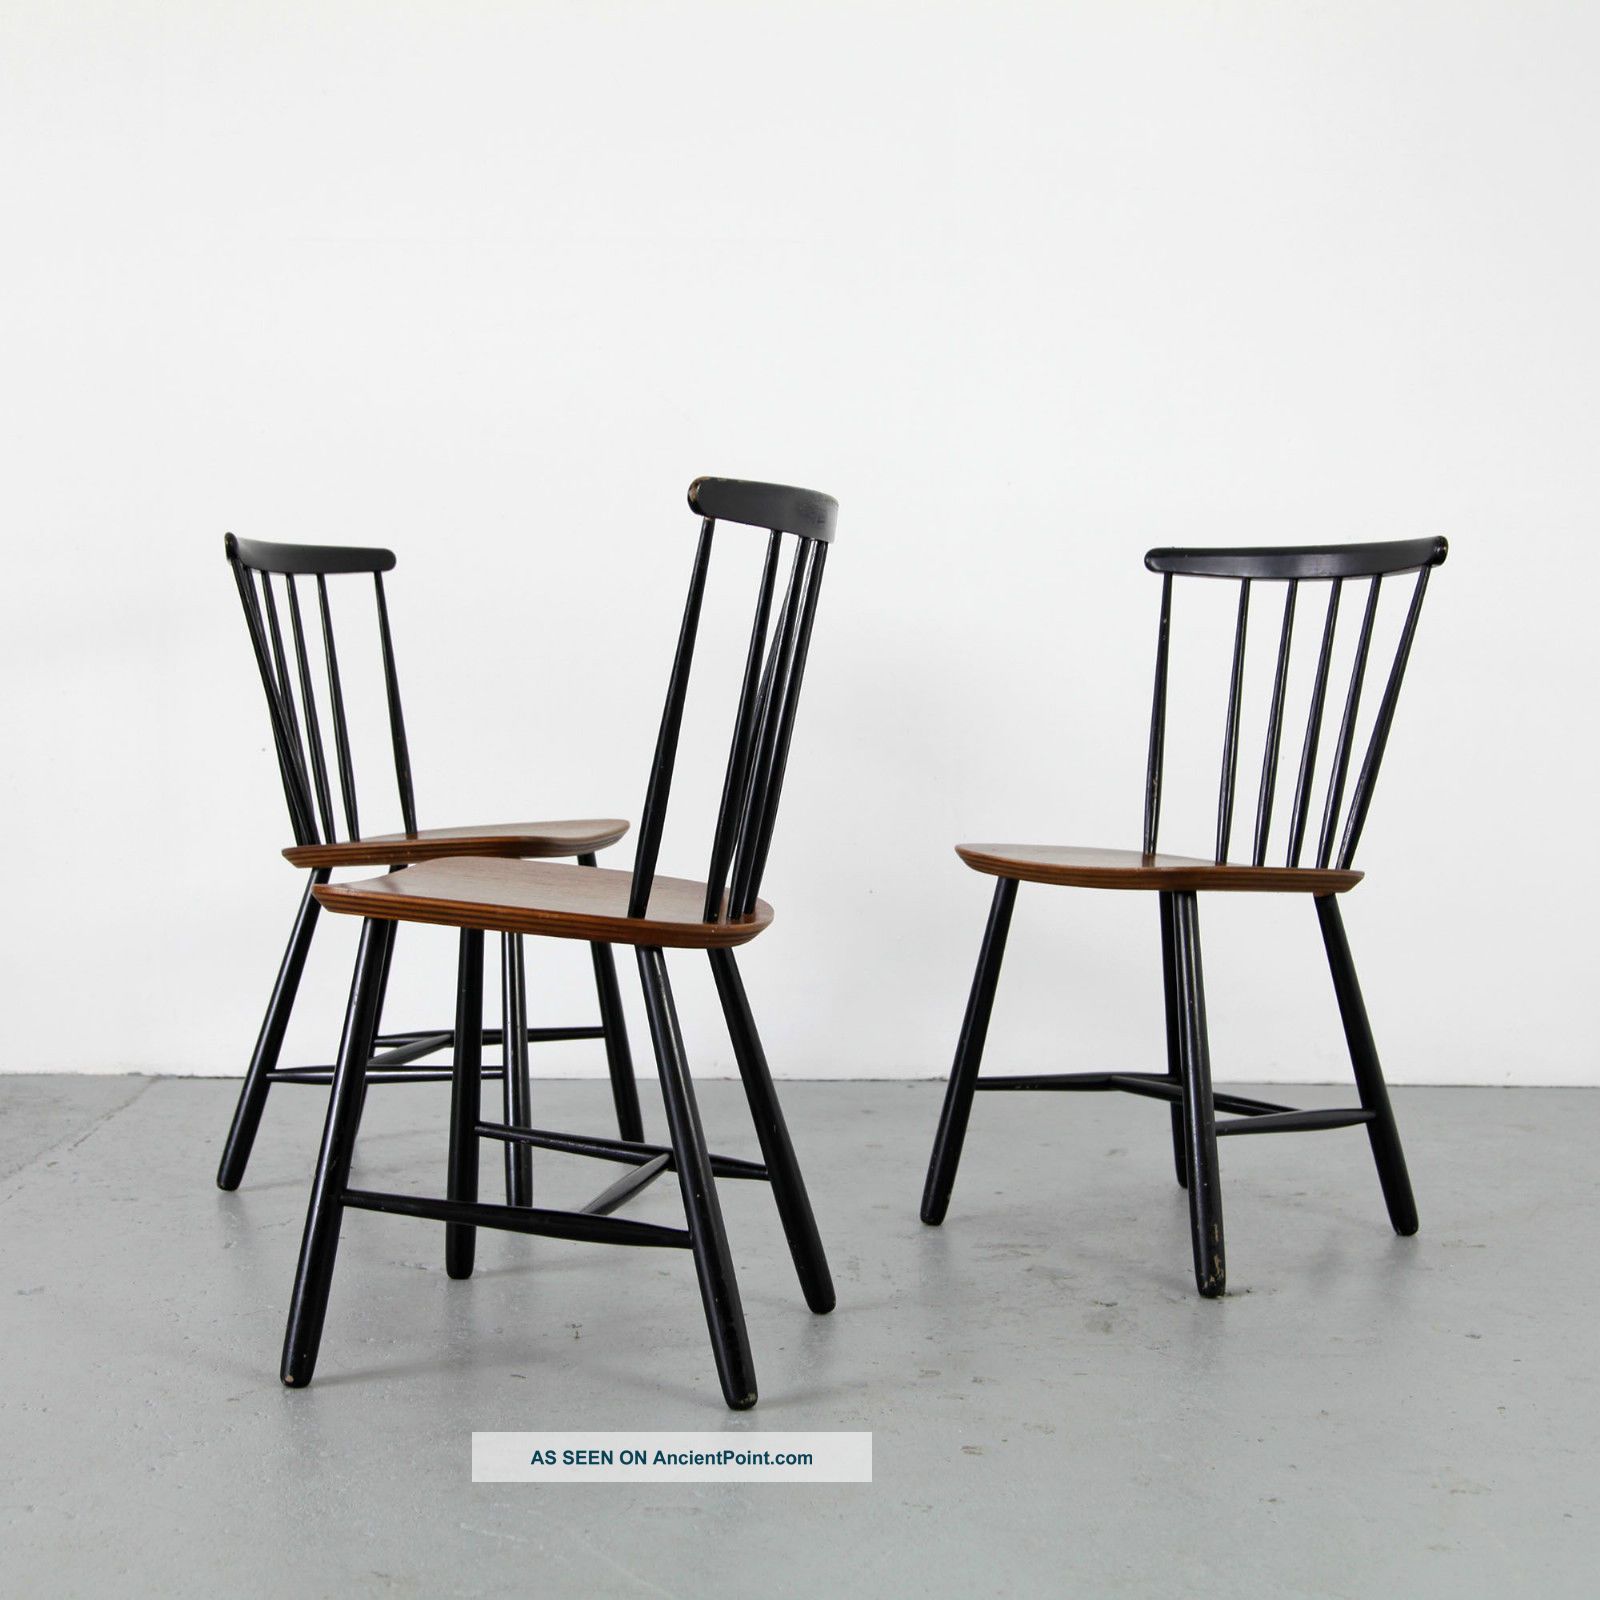 3 Mid Century Modern Teak Chairs 60s Denmark | Danish Modern Stühle W Tapiovaara 1900-1950 photo